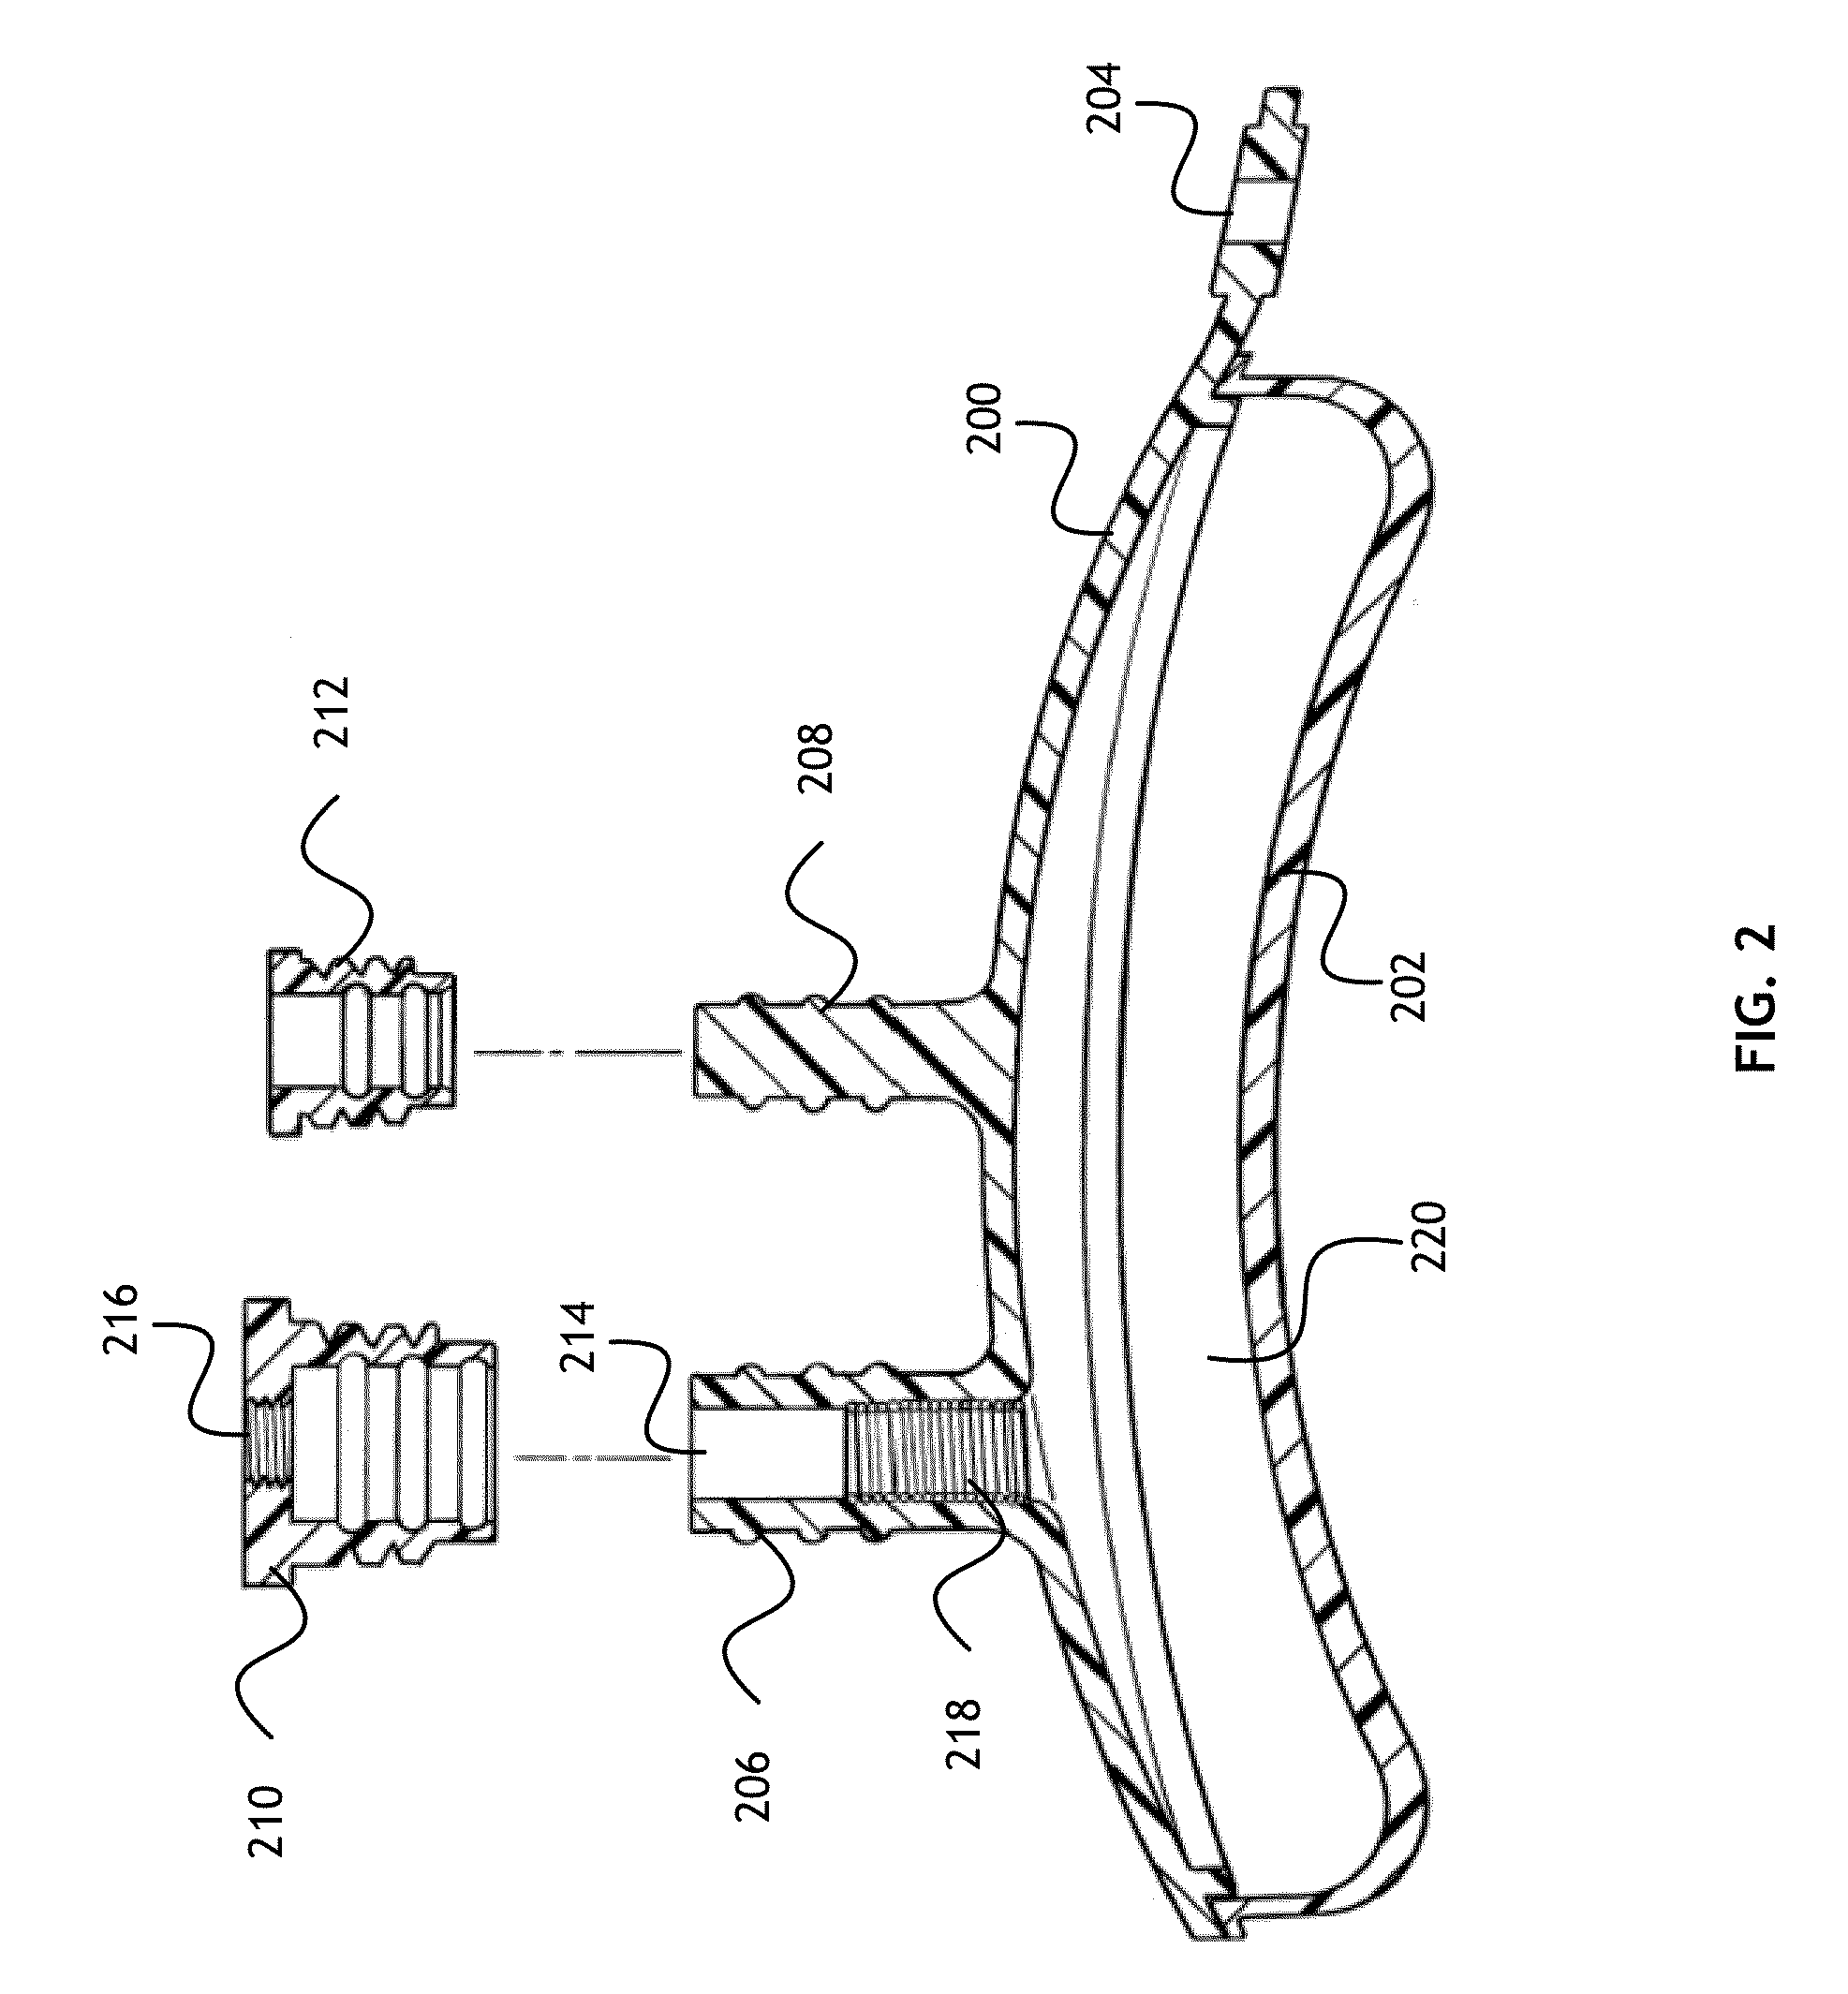 Balloon implant device